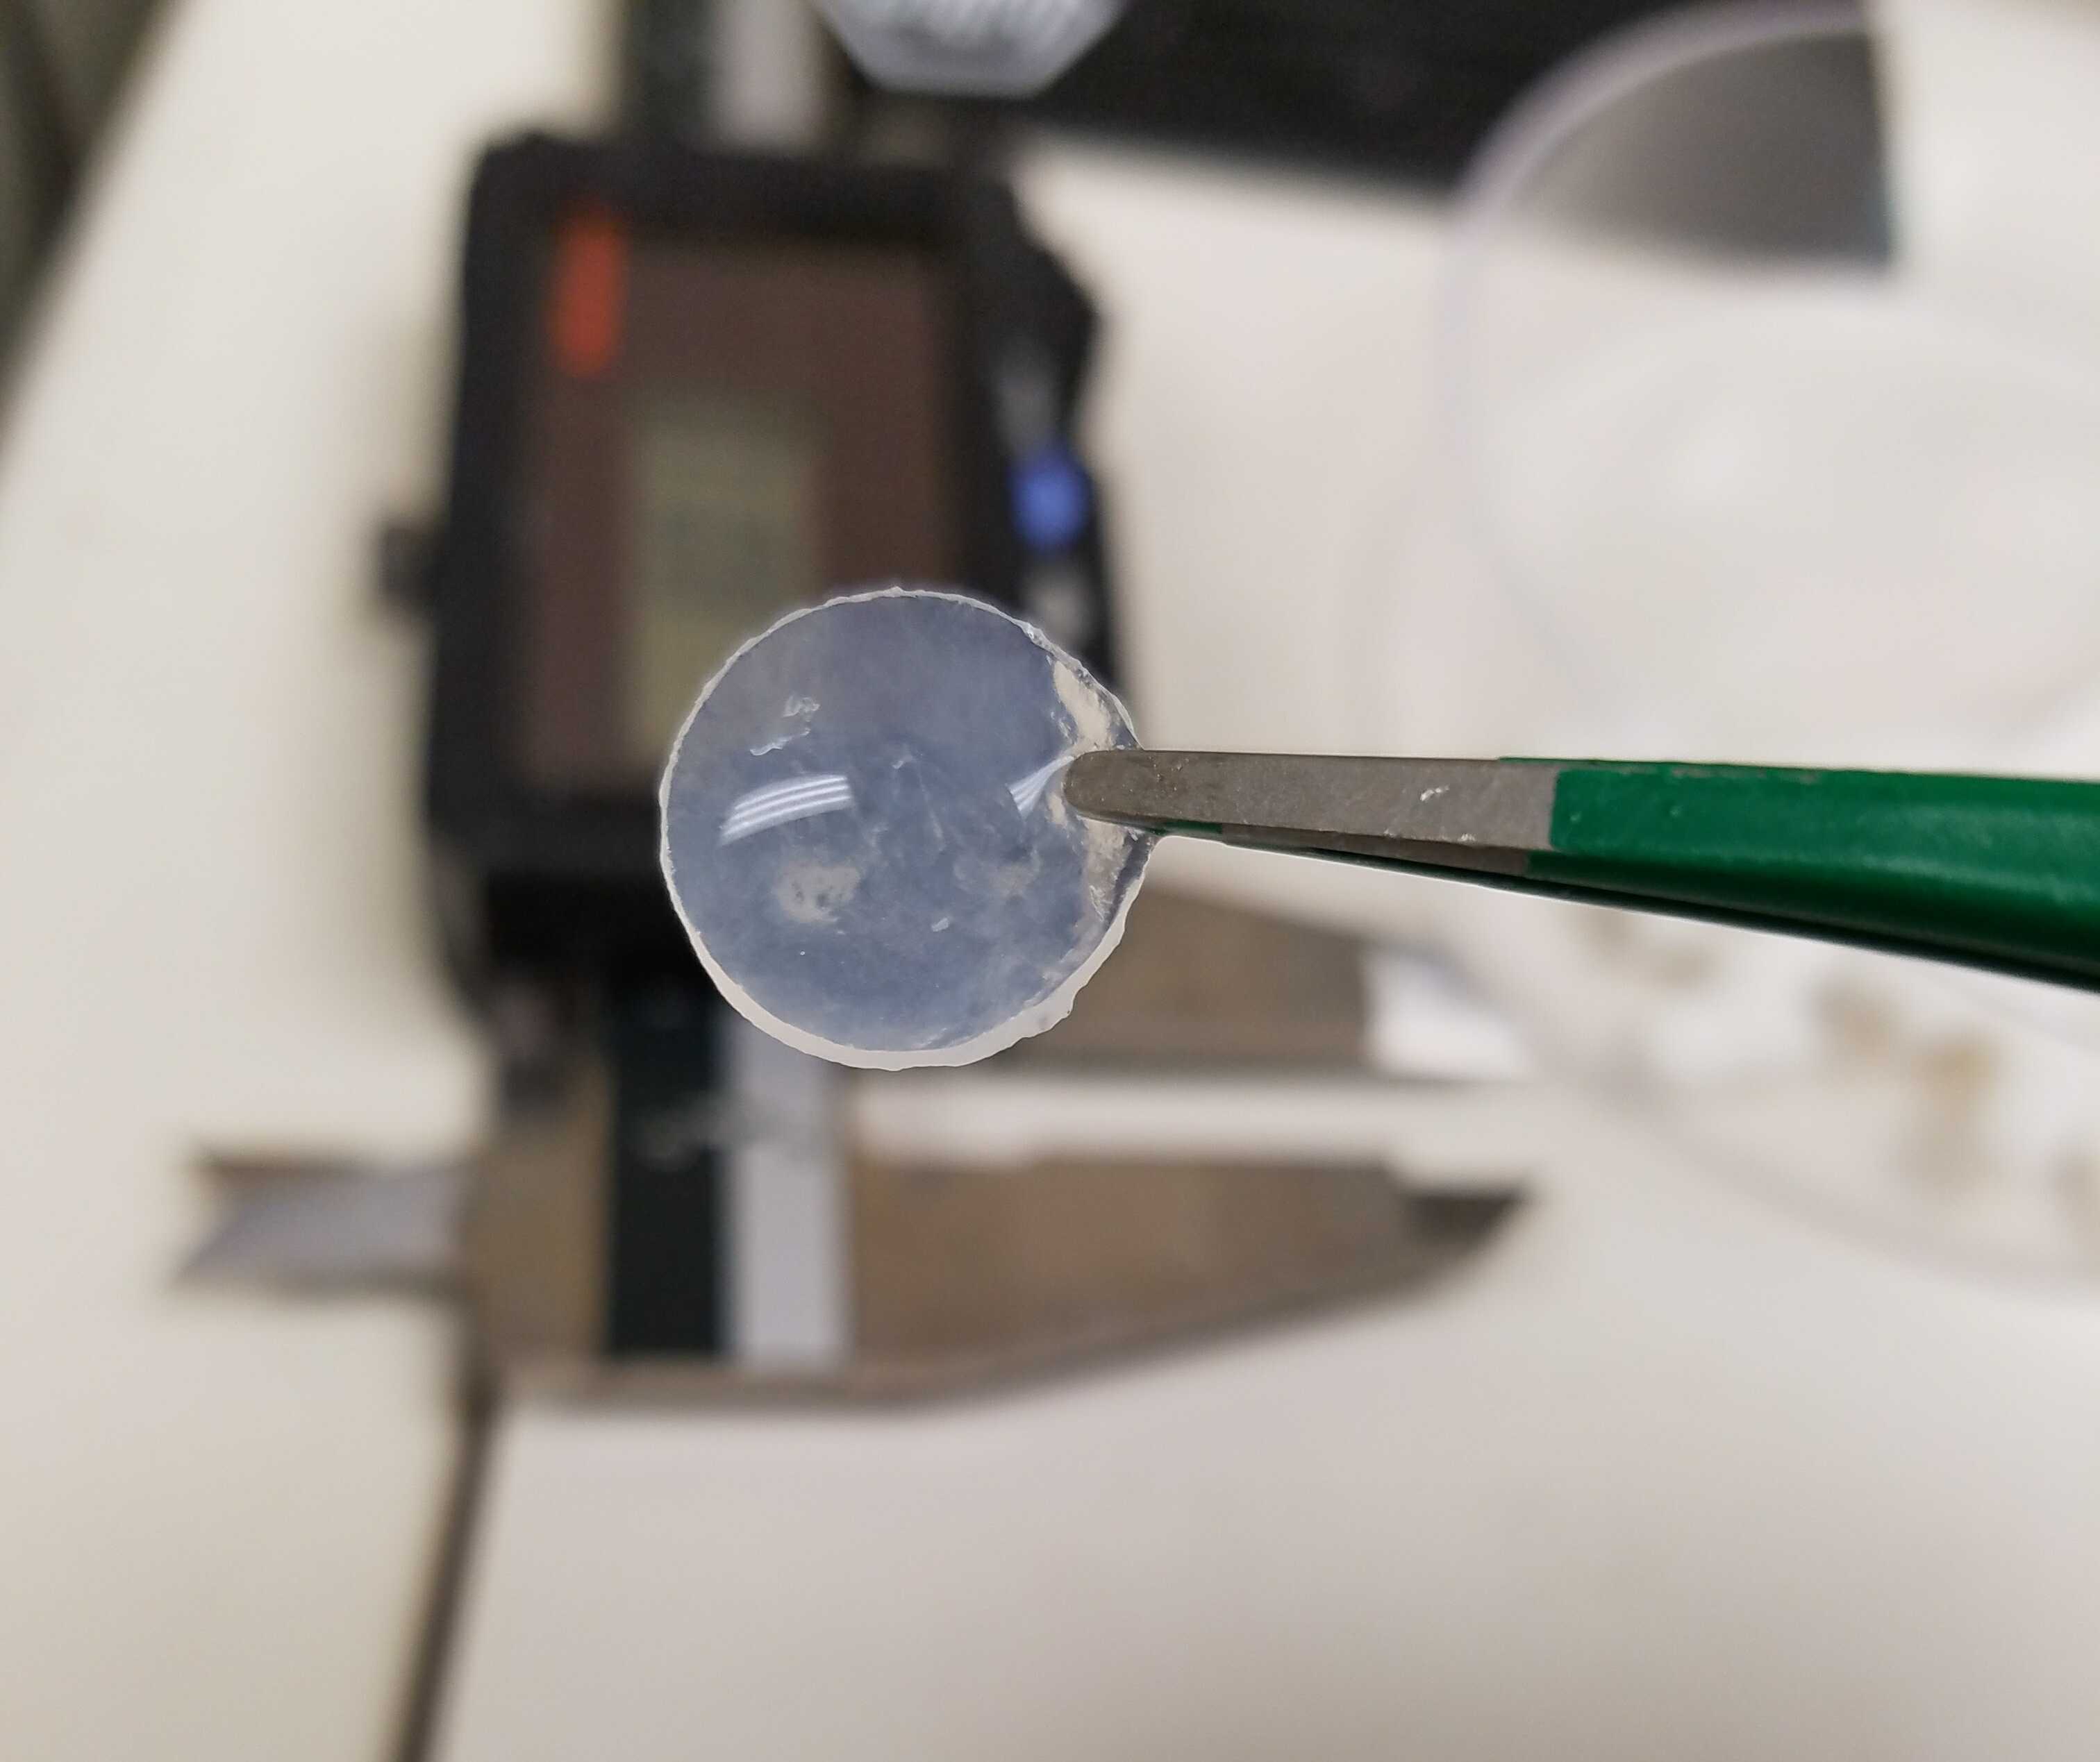 Eyegenix Prototype Biosynthetic Artificial Cornea